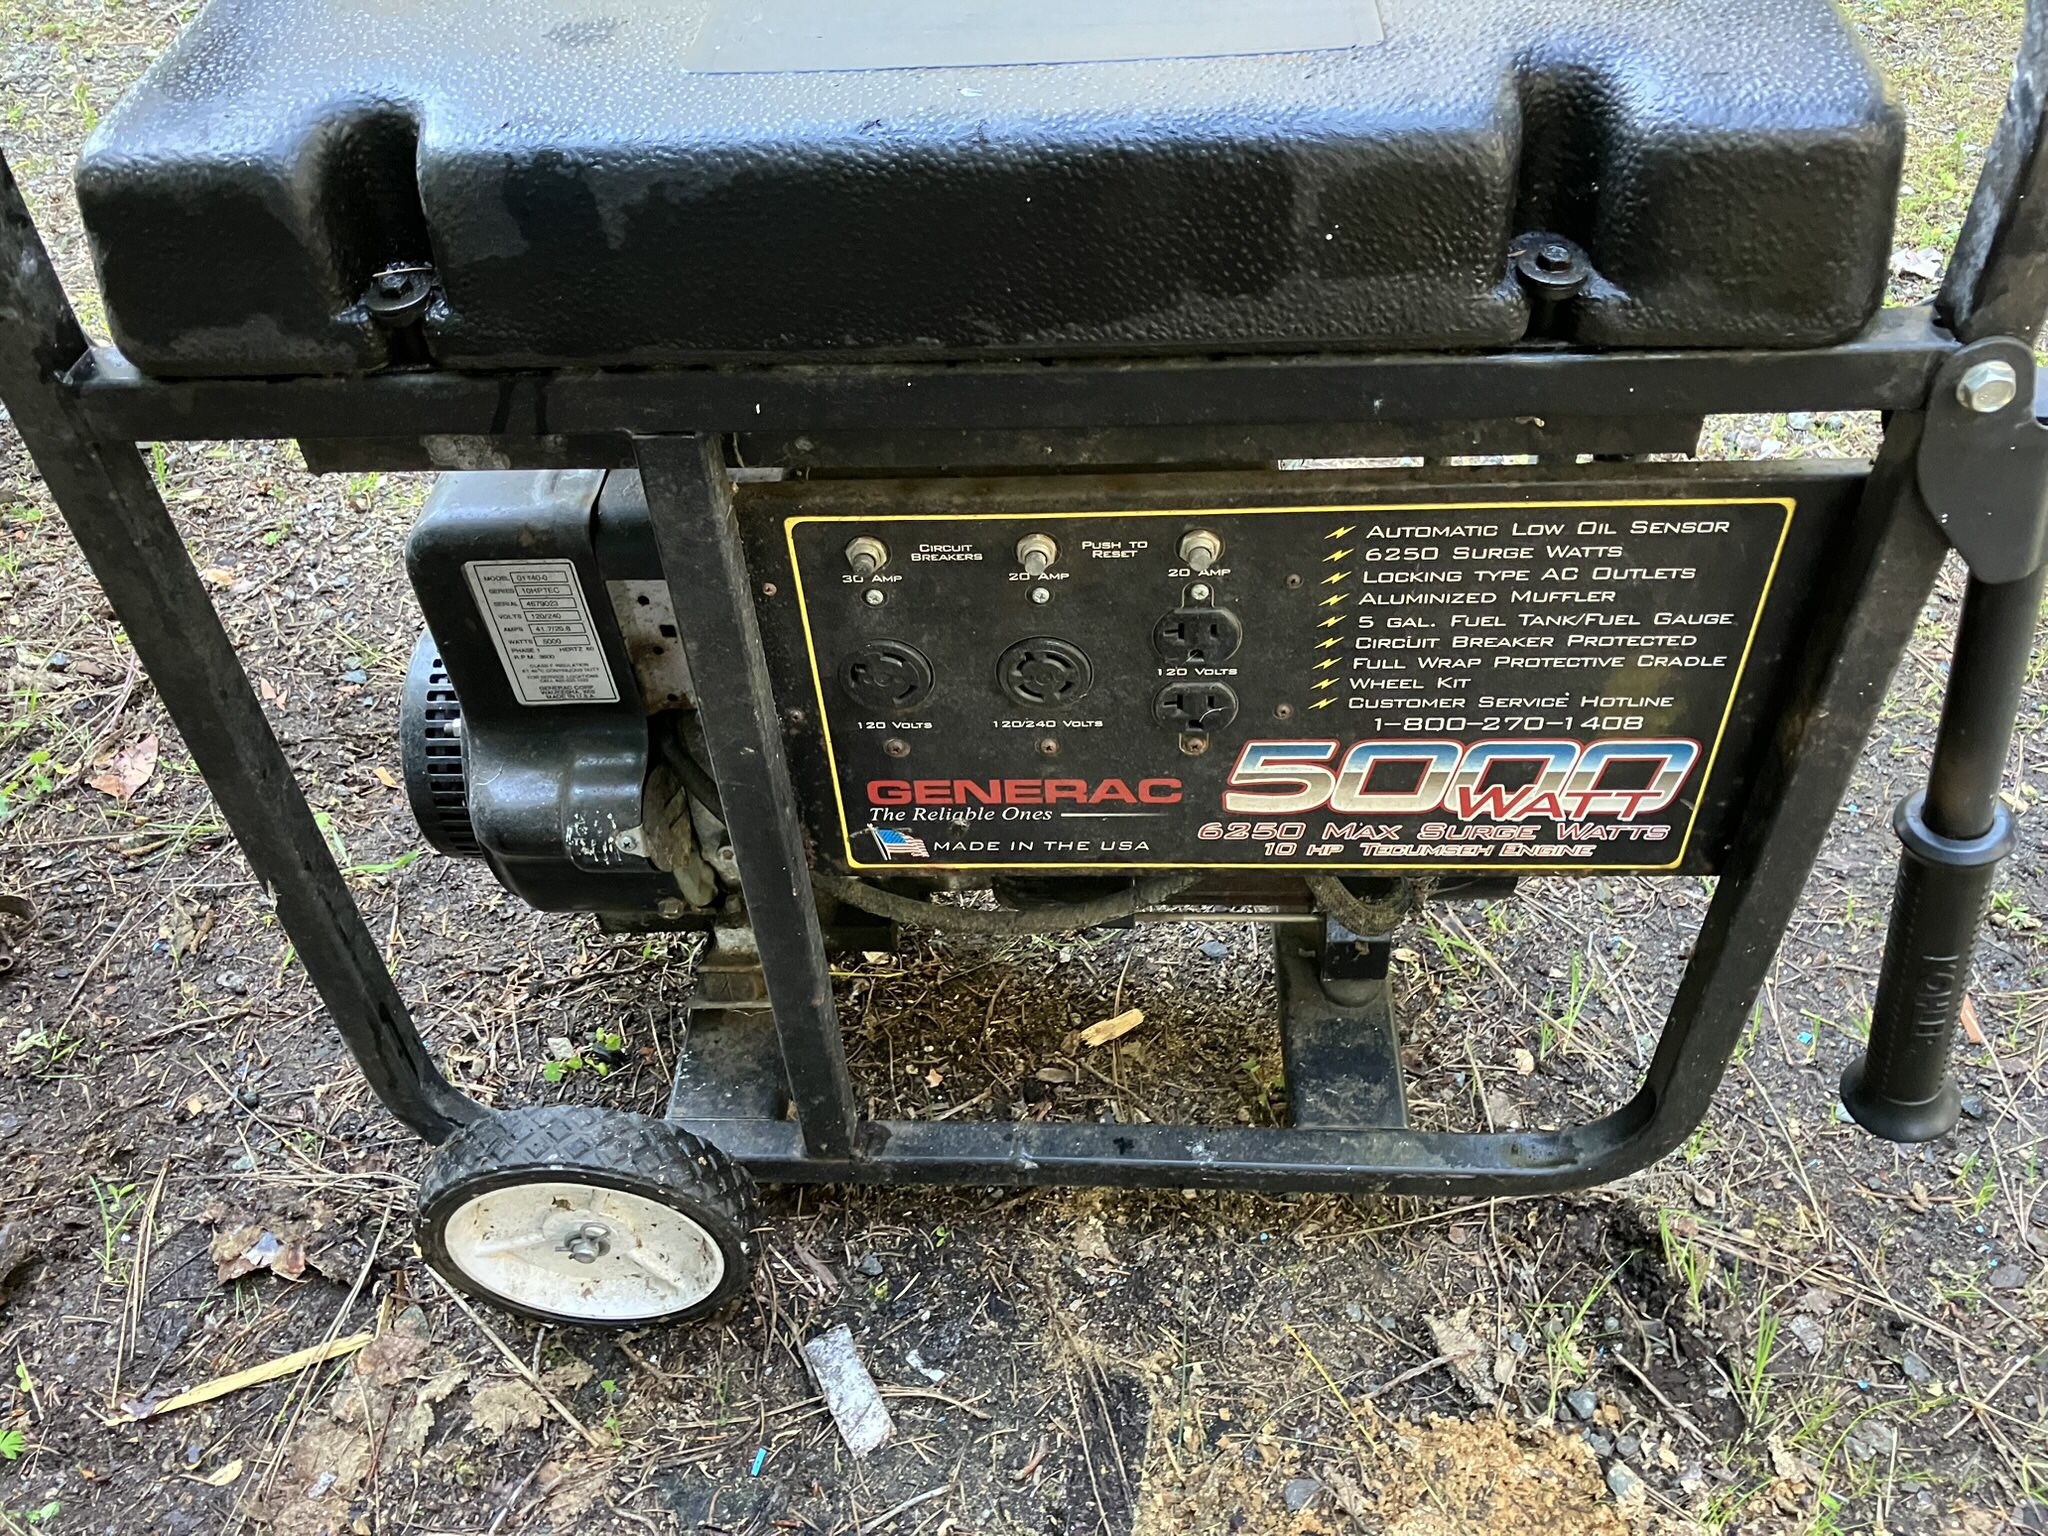 $100 - Generac PP 5000T generator (Was Priced At $150)